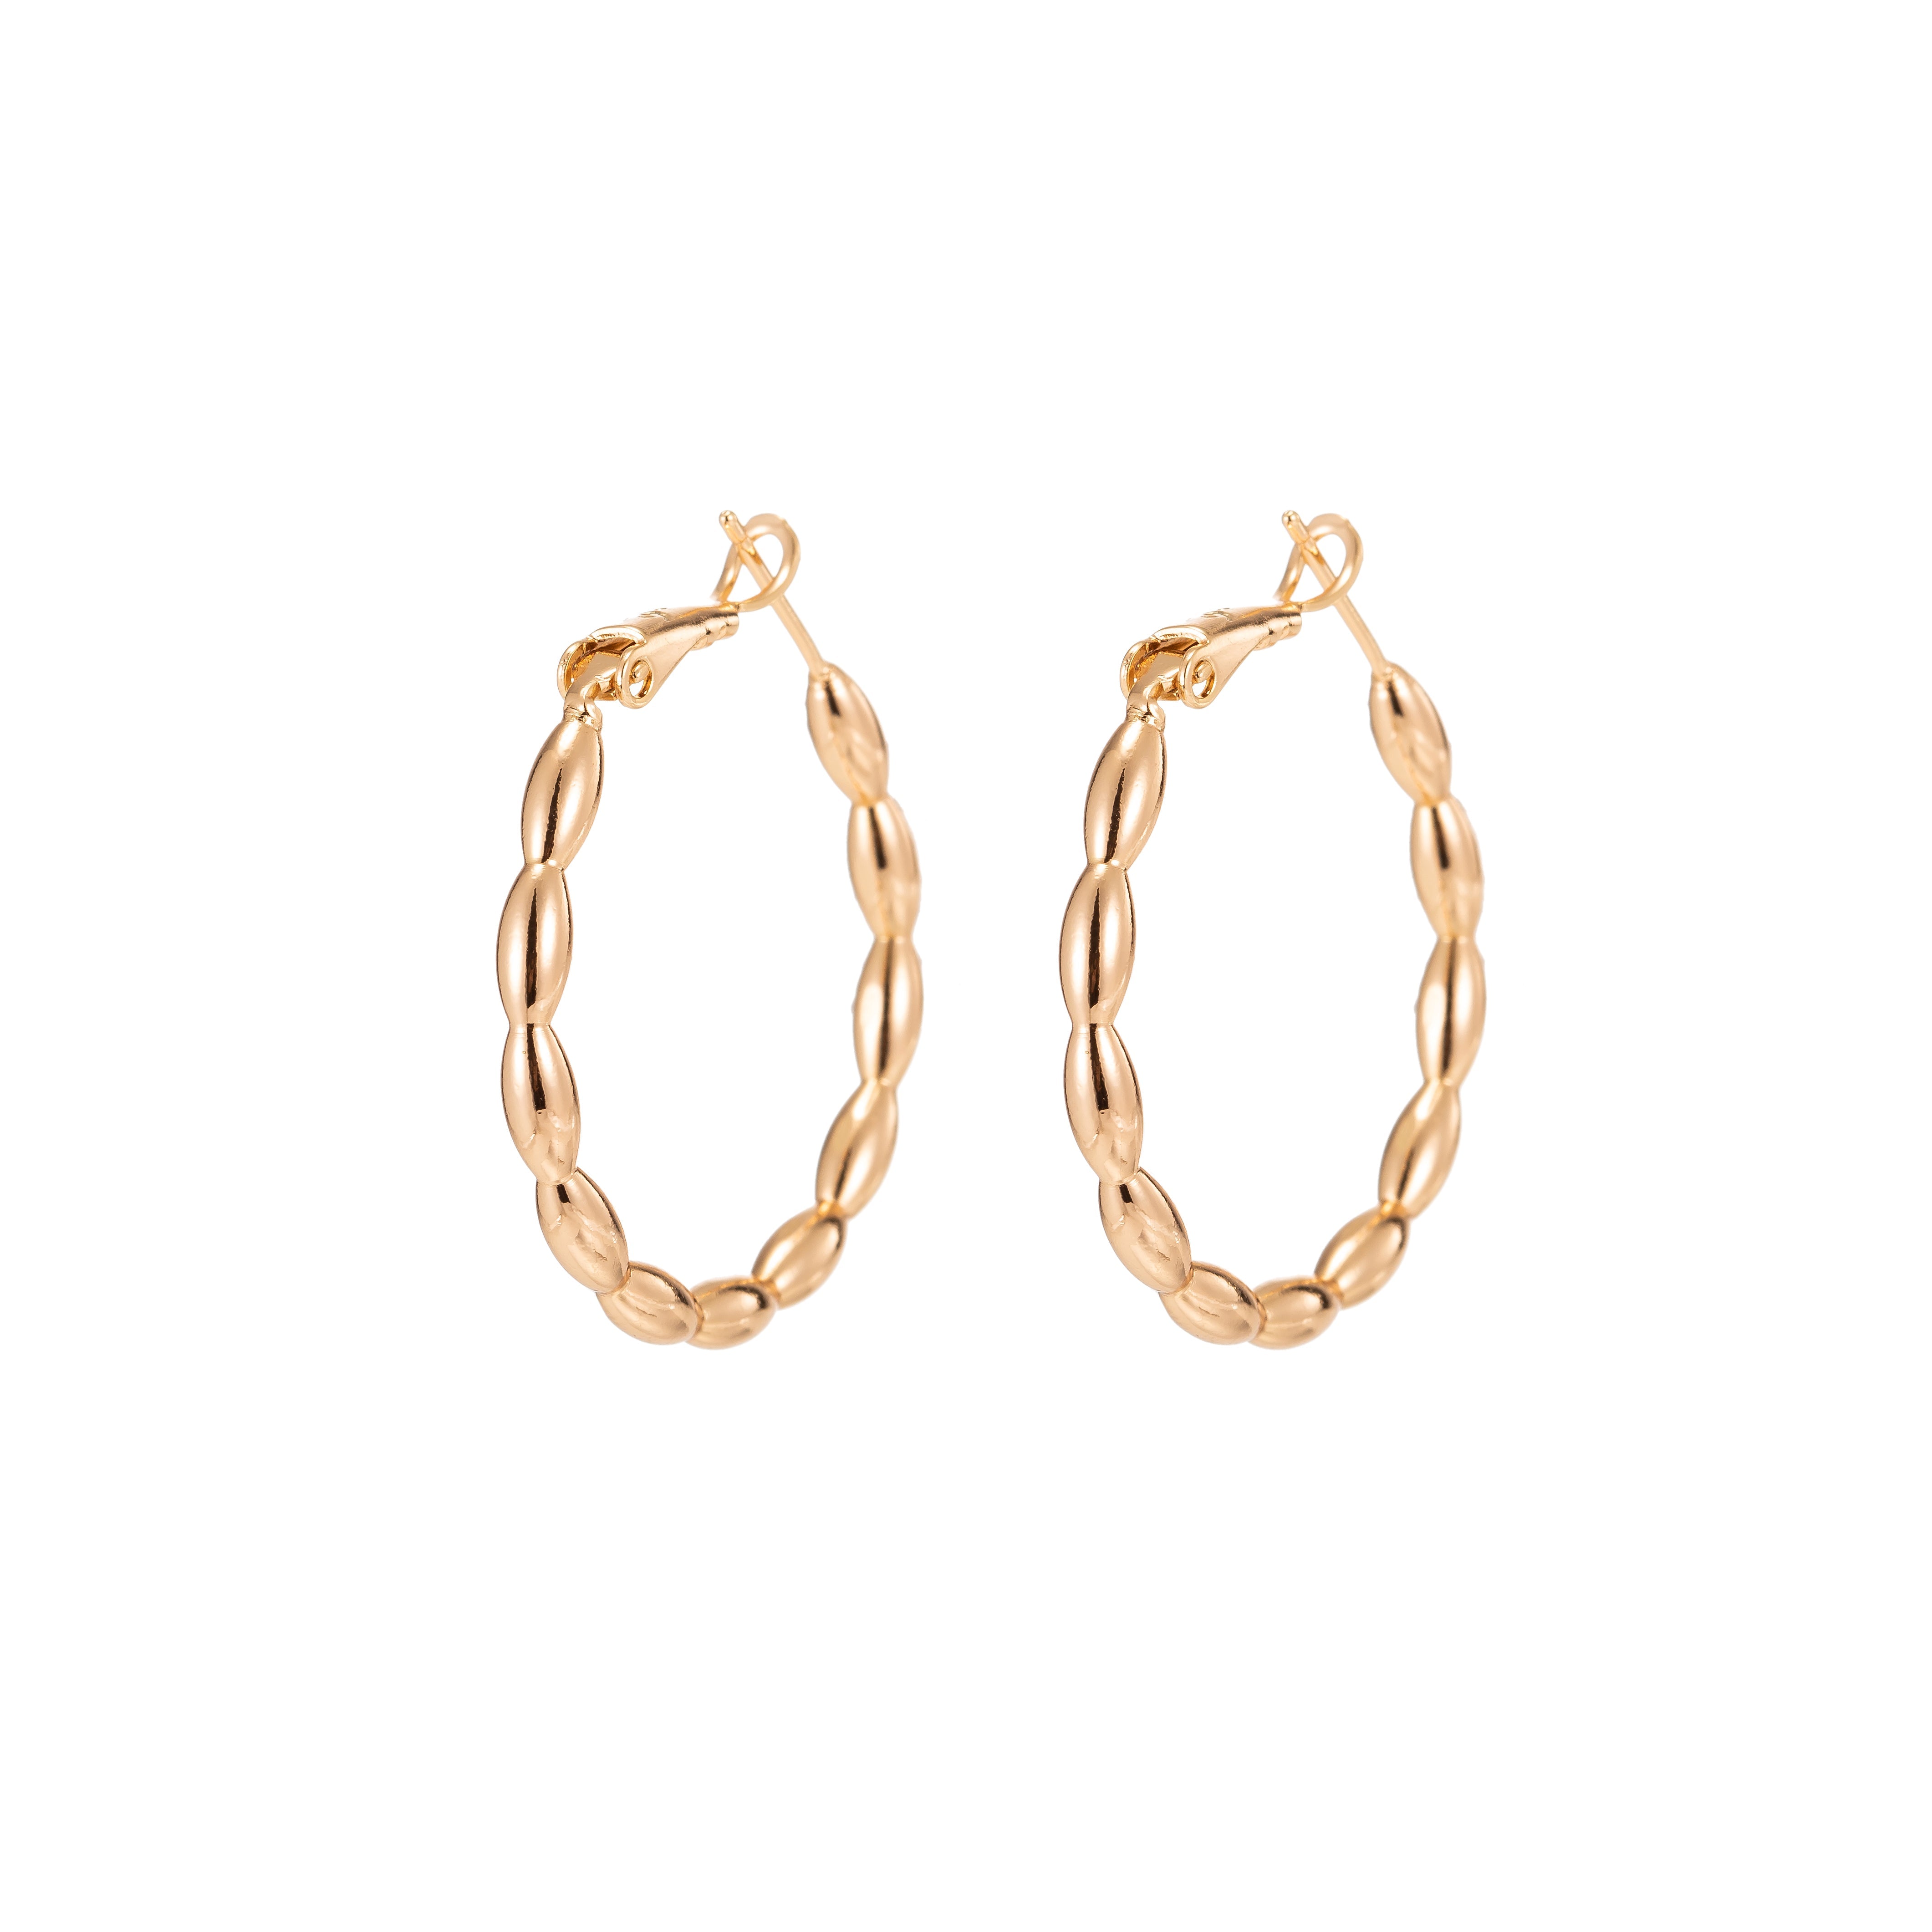 1pair Mini Oval Braids Huggies Earrings, Tiny Plain Gold Filled Geometric Formal/Casual Daily Wear Earring Jewelry P034 - DLUXCA